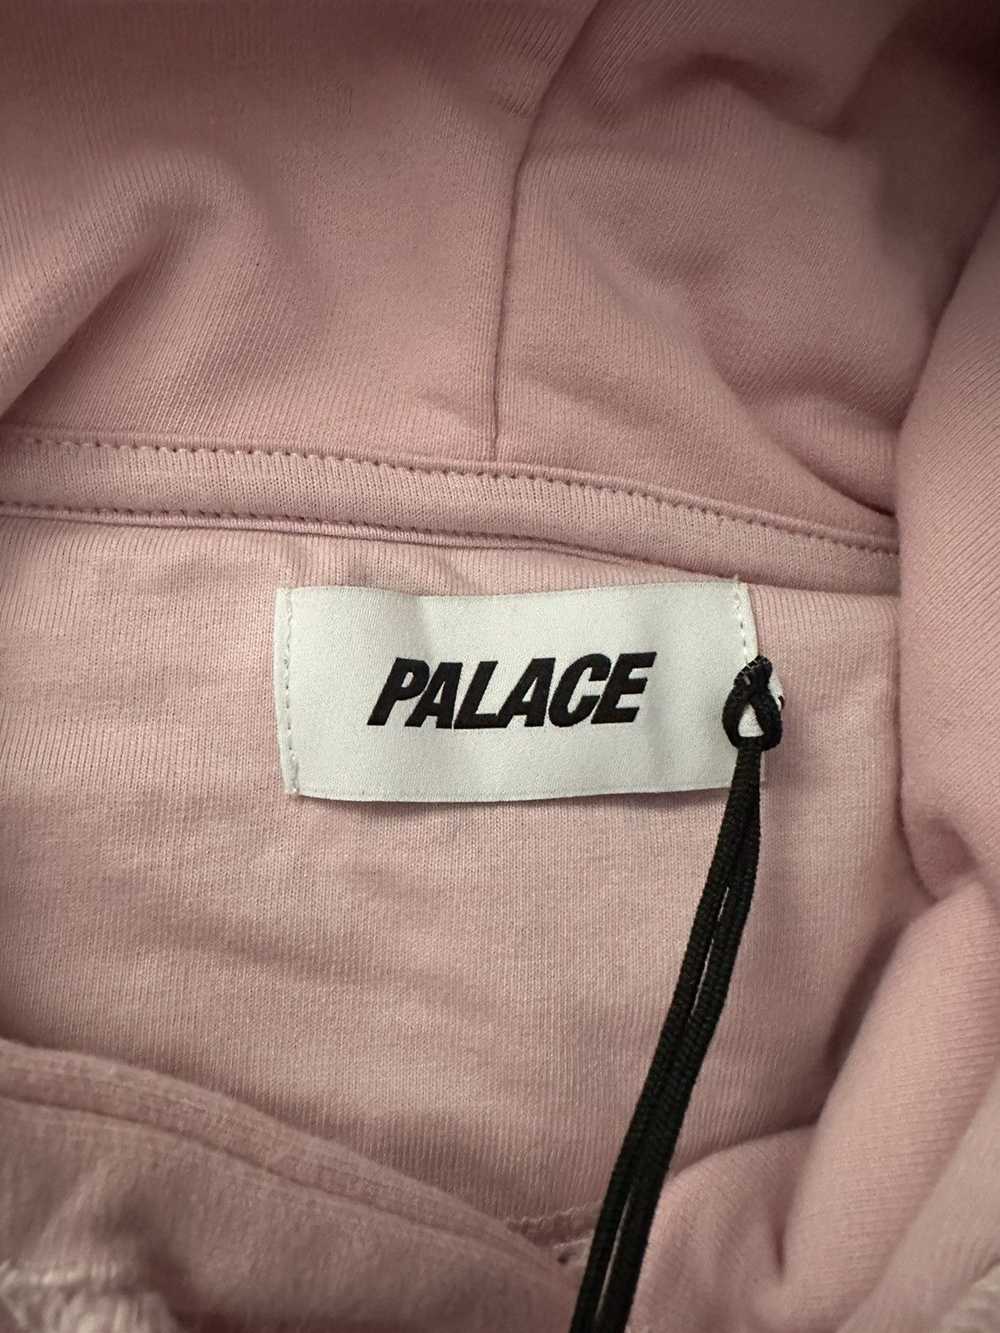 Palace × Streetwear Palace Temptation - image 8